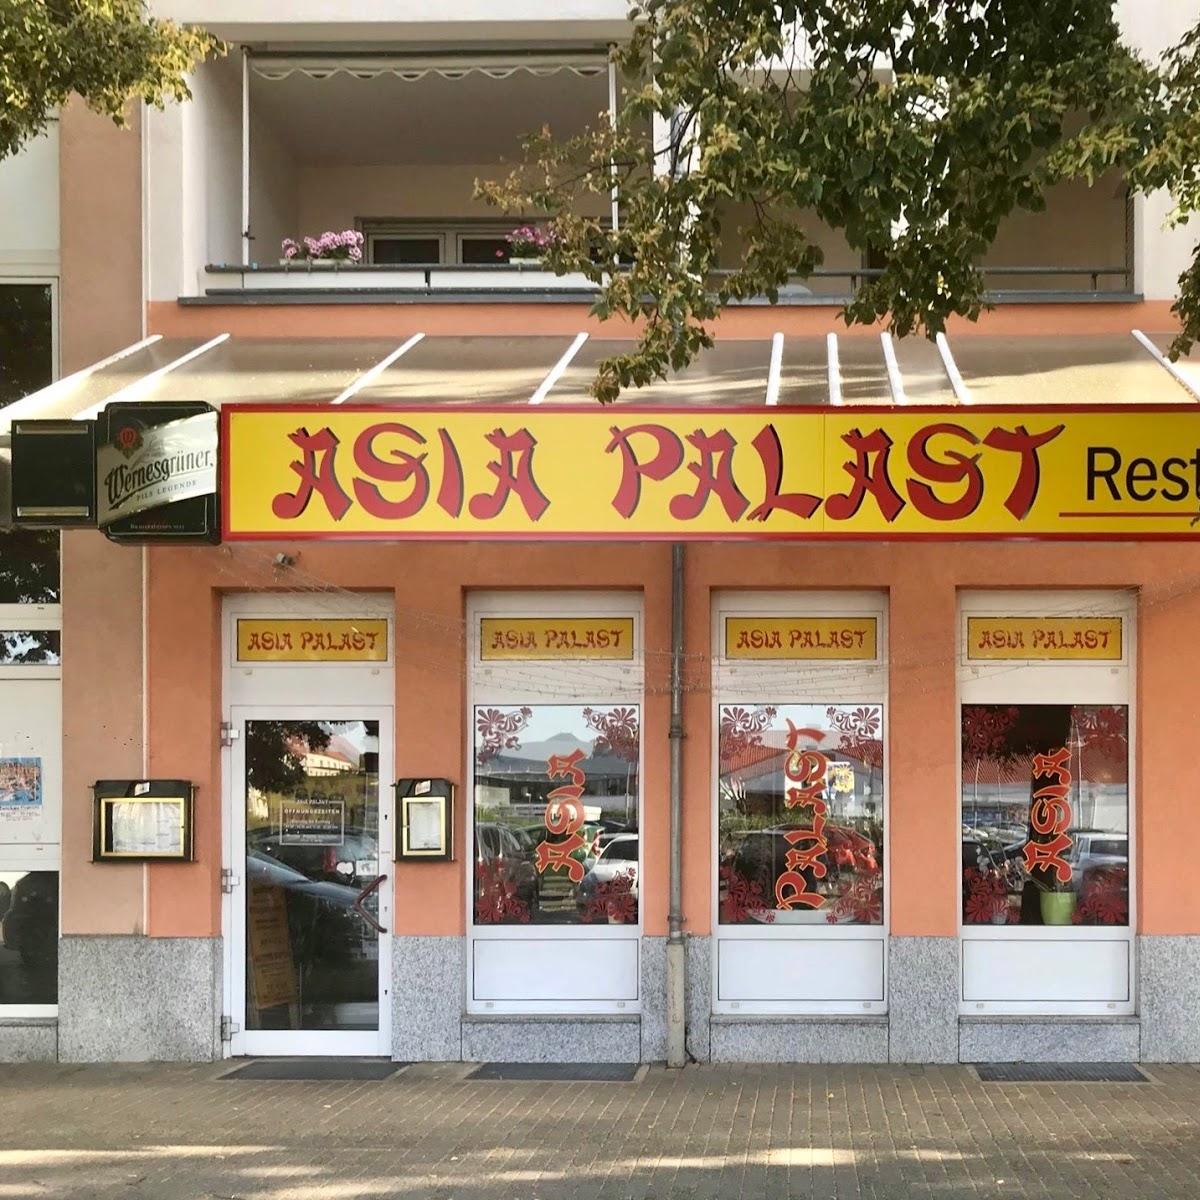 Restaurant "Asia Palast" in Zwickau